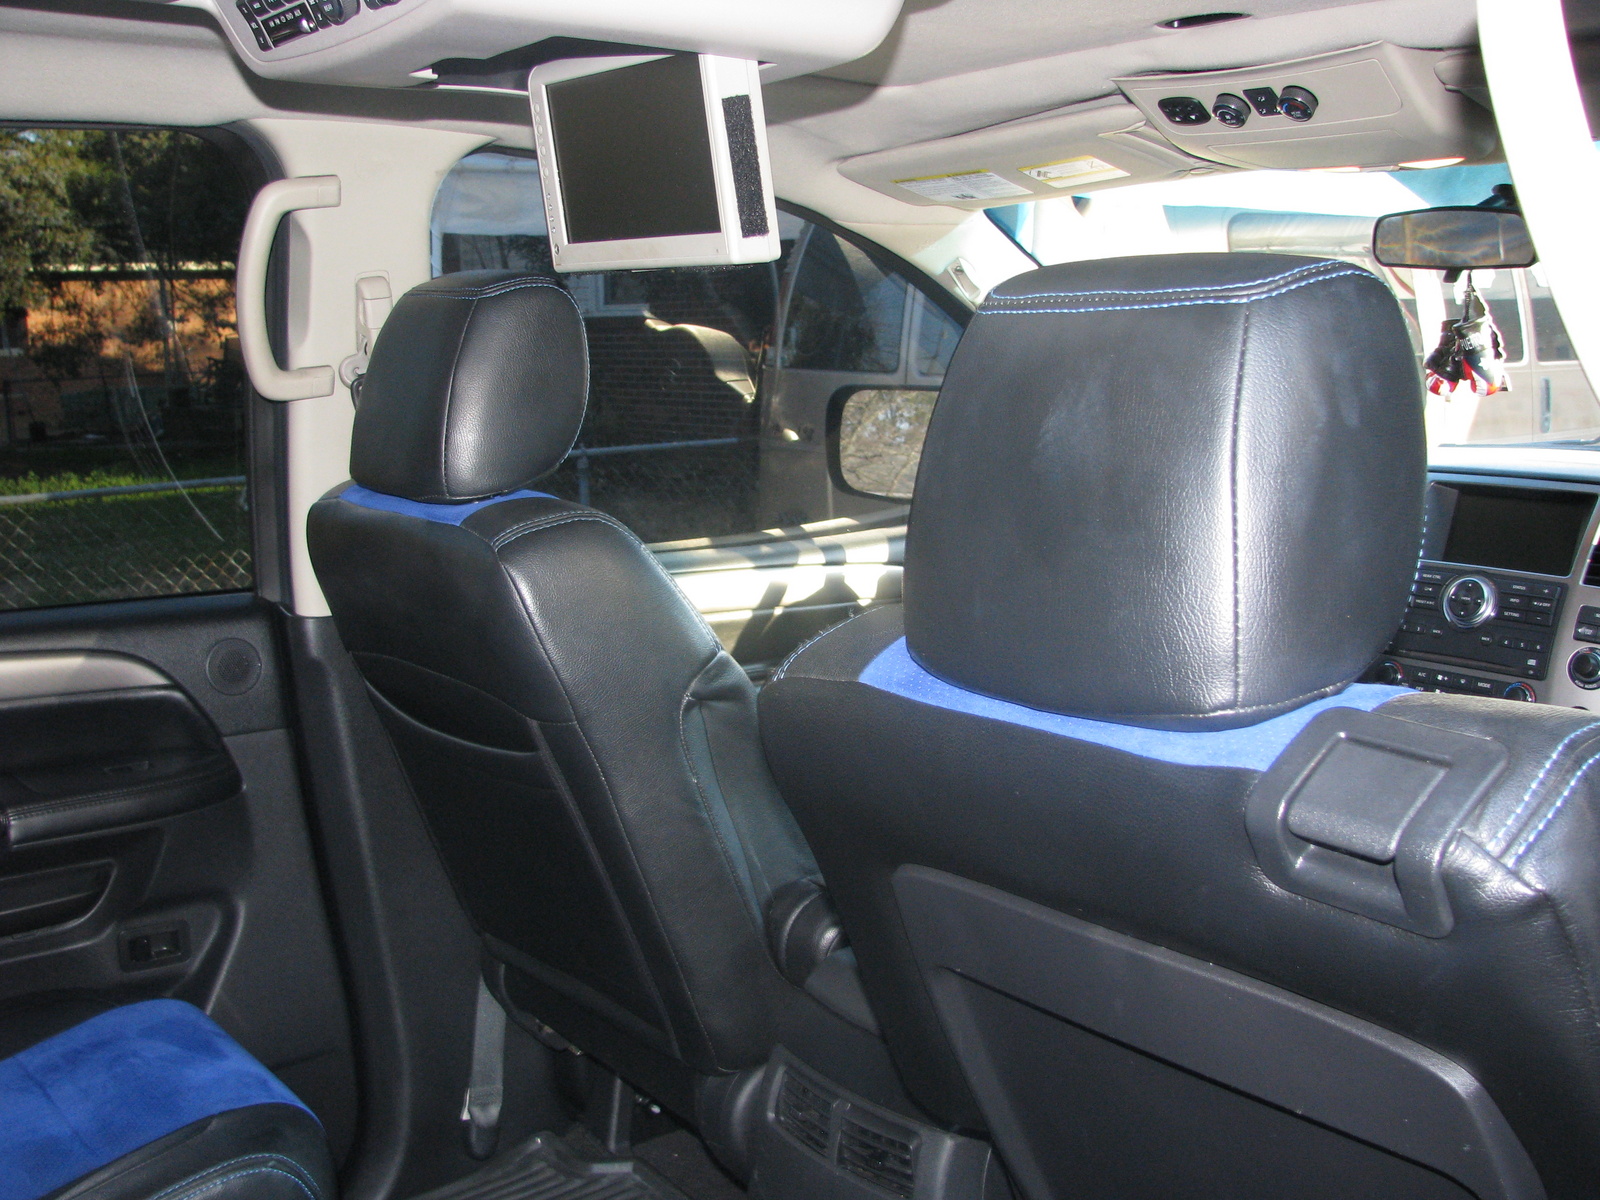 2008 Nissan armada interior dimensions